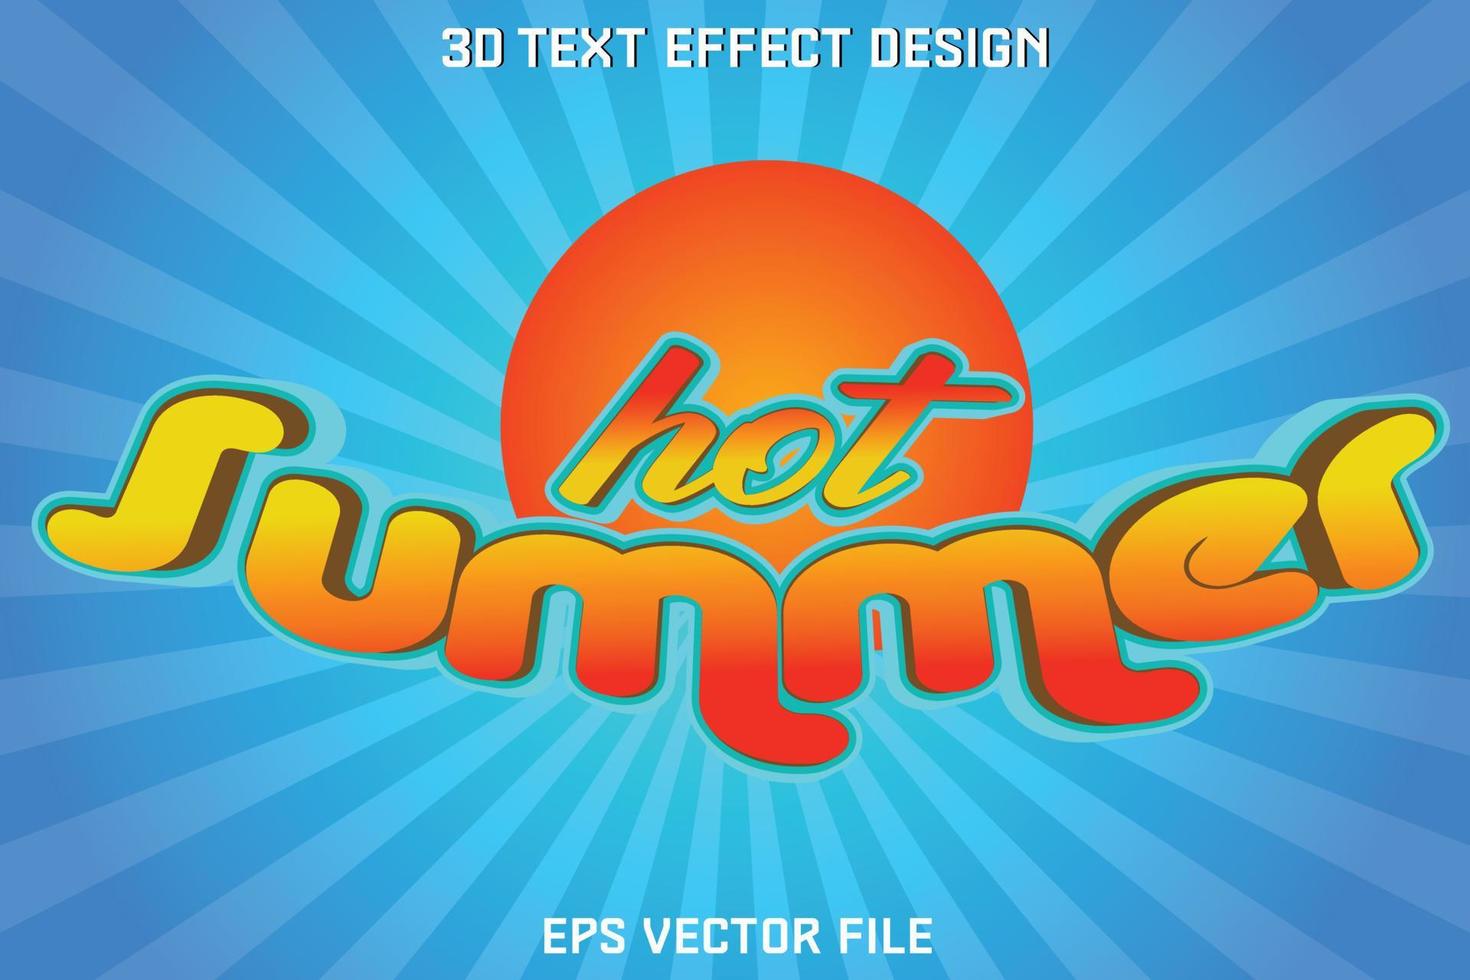 caliente verano 3d texto efecto diseño vector